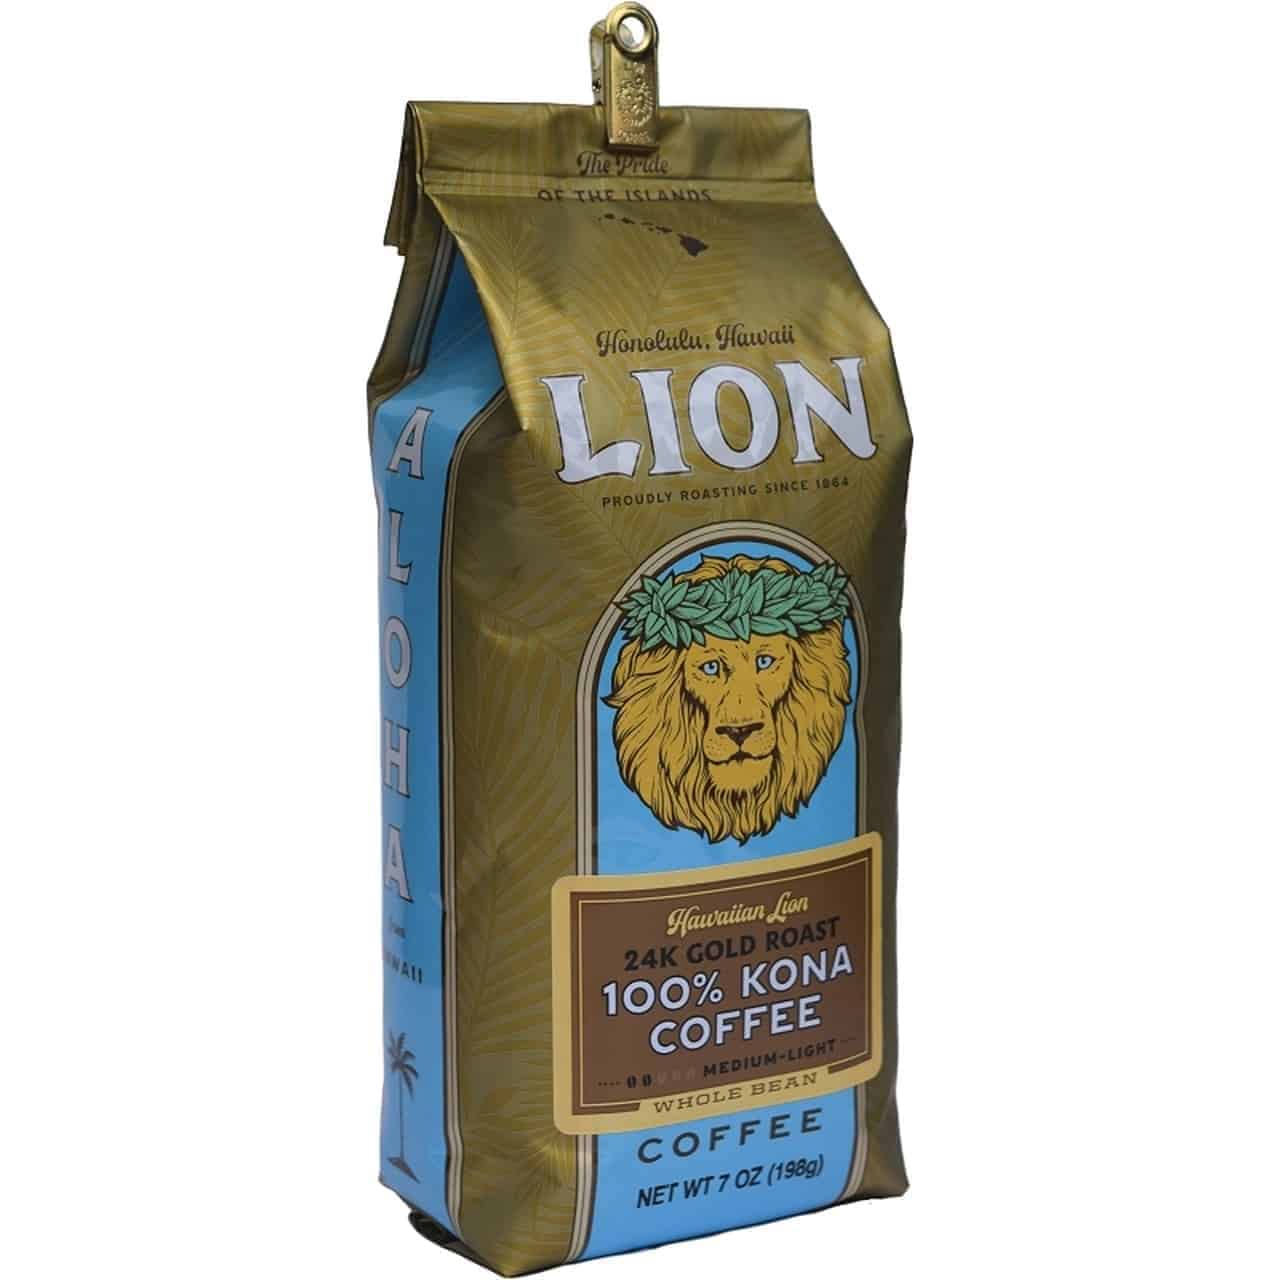 LION 24Karat Kona Coffee